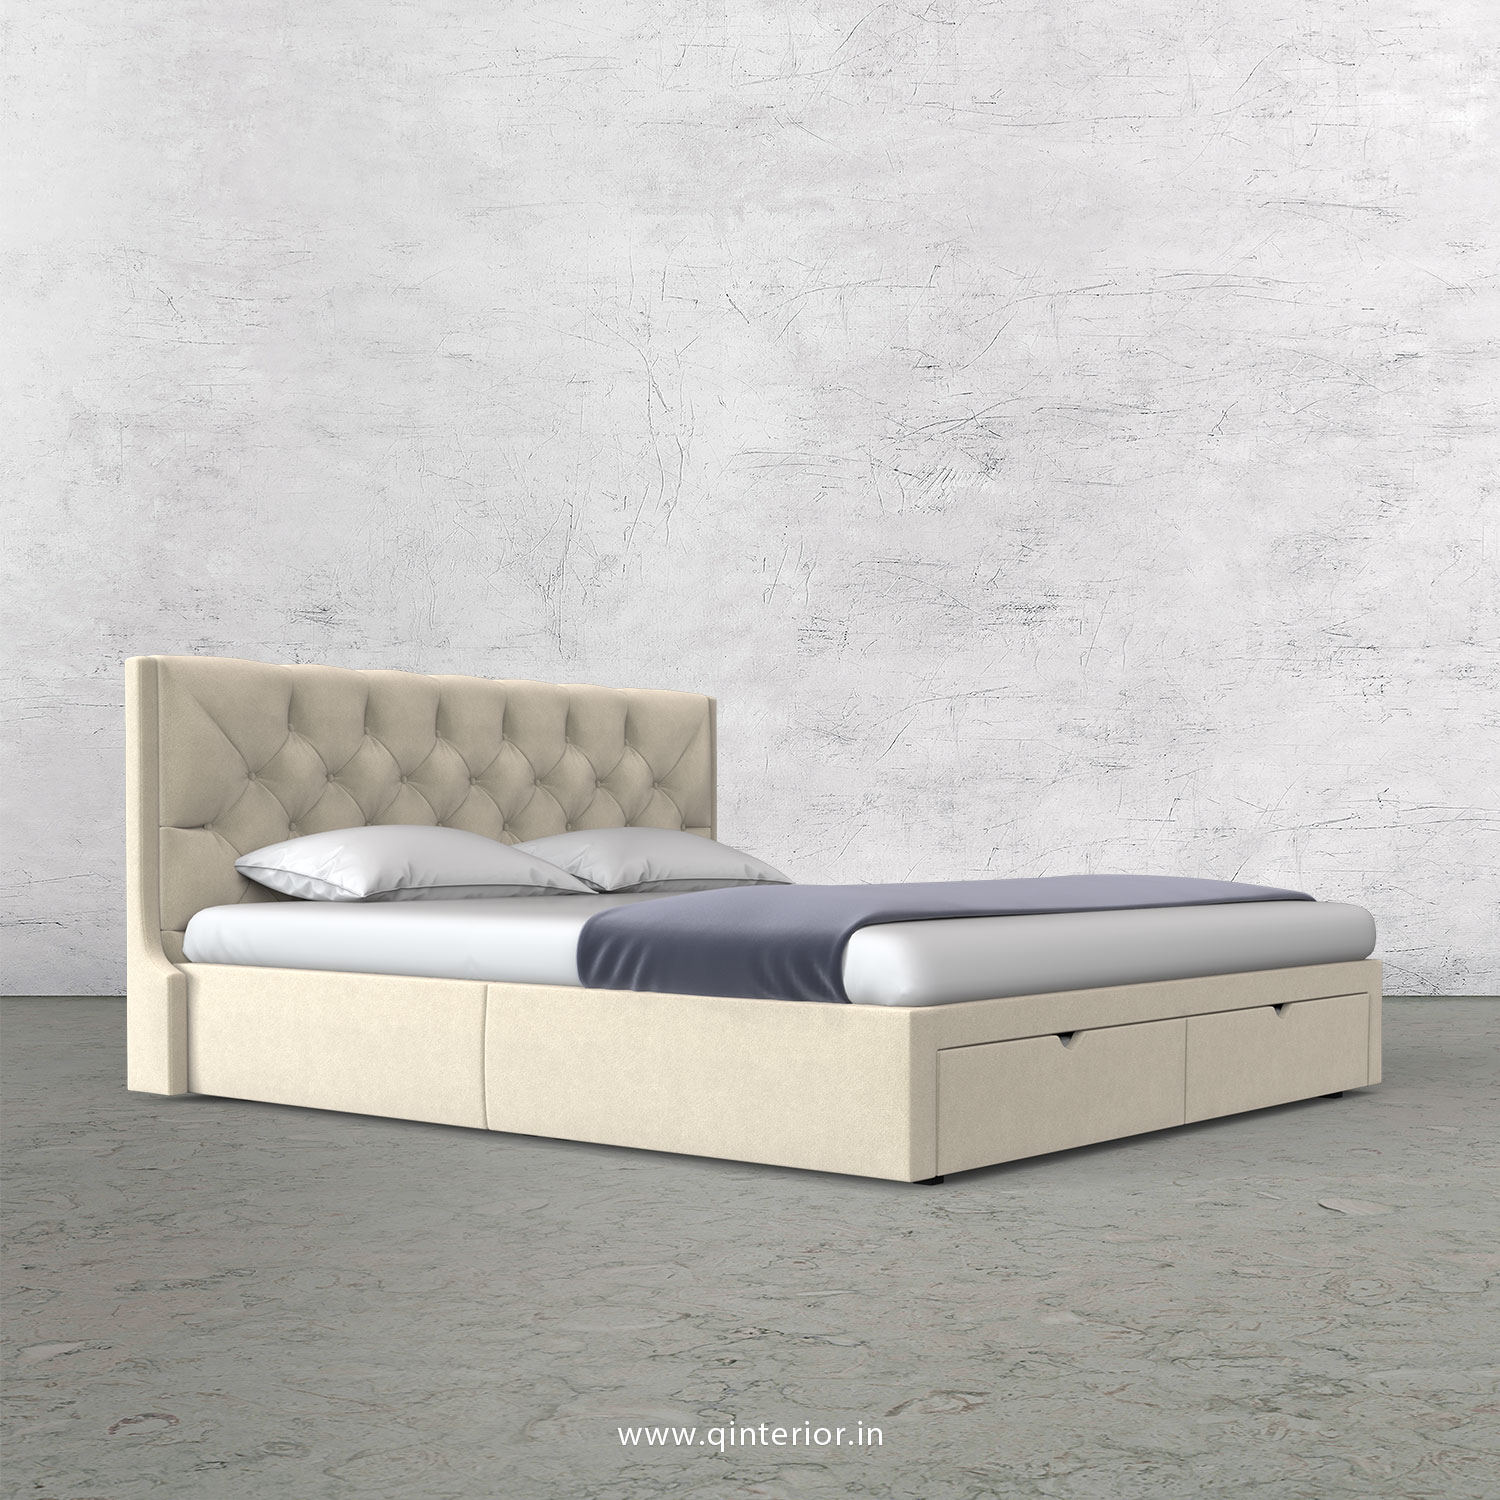 Scorpius King Size Storage Bed in Velvet Fabric - KBD001 VL01